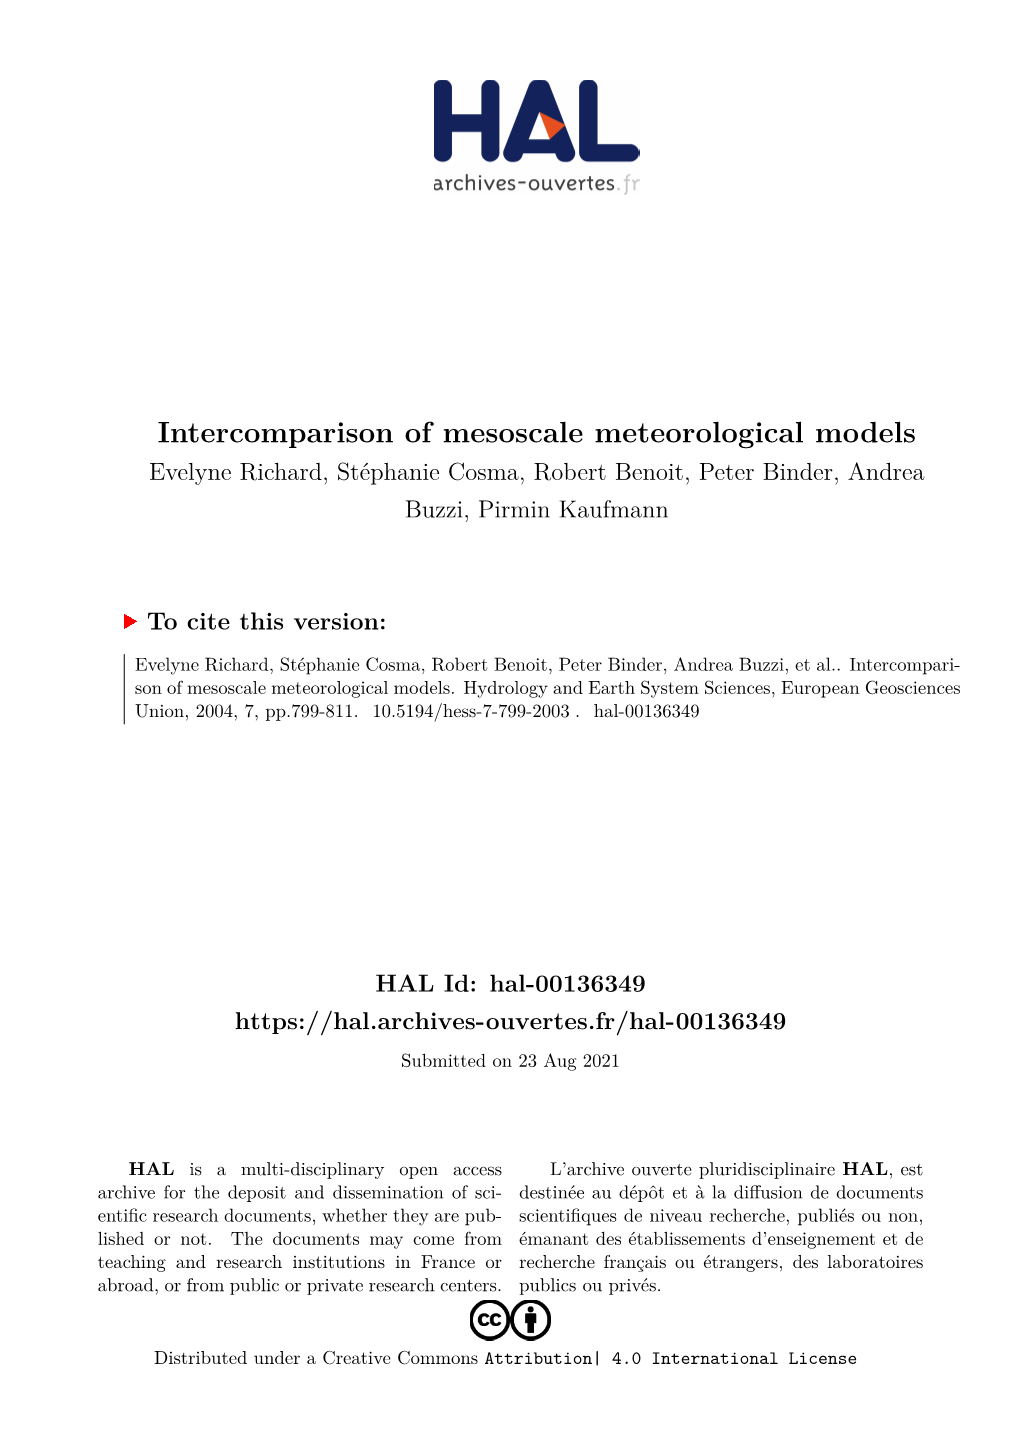 Intercomparison of Mesoscale Meteorological Models Evelyne Richard, Stéphanie Cosma, Robert Benoit, Peter Binder, Andrea Buzzi, Pirmin Kaufmann